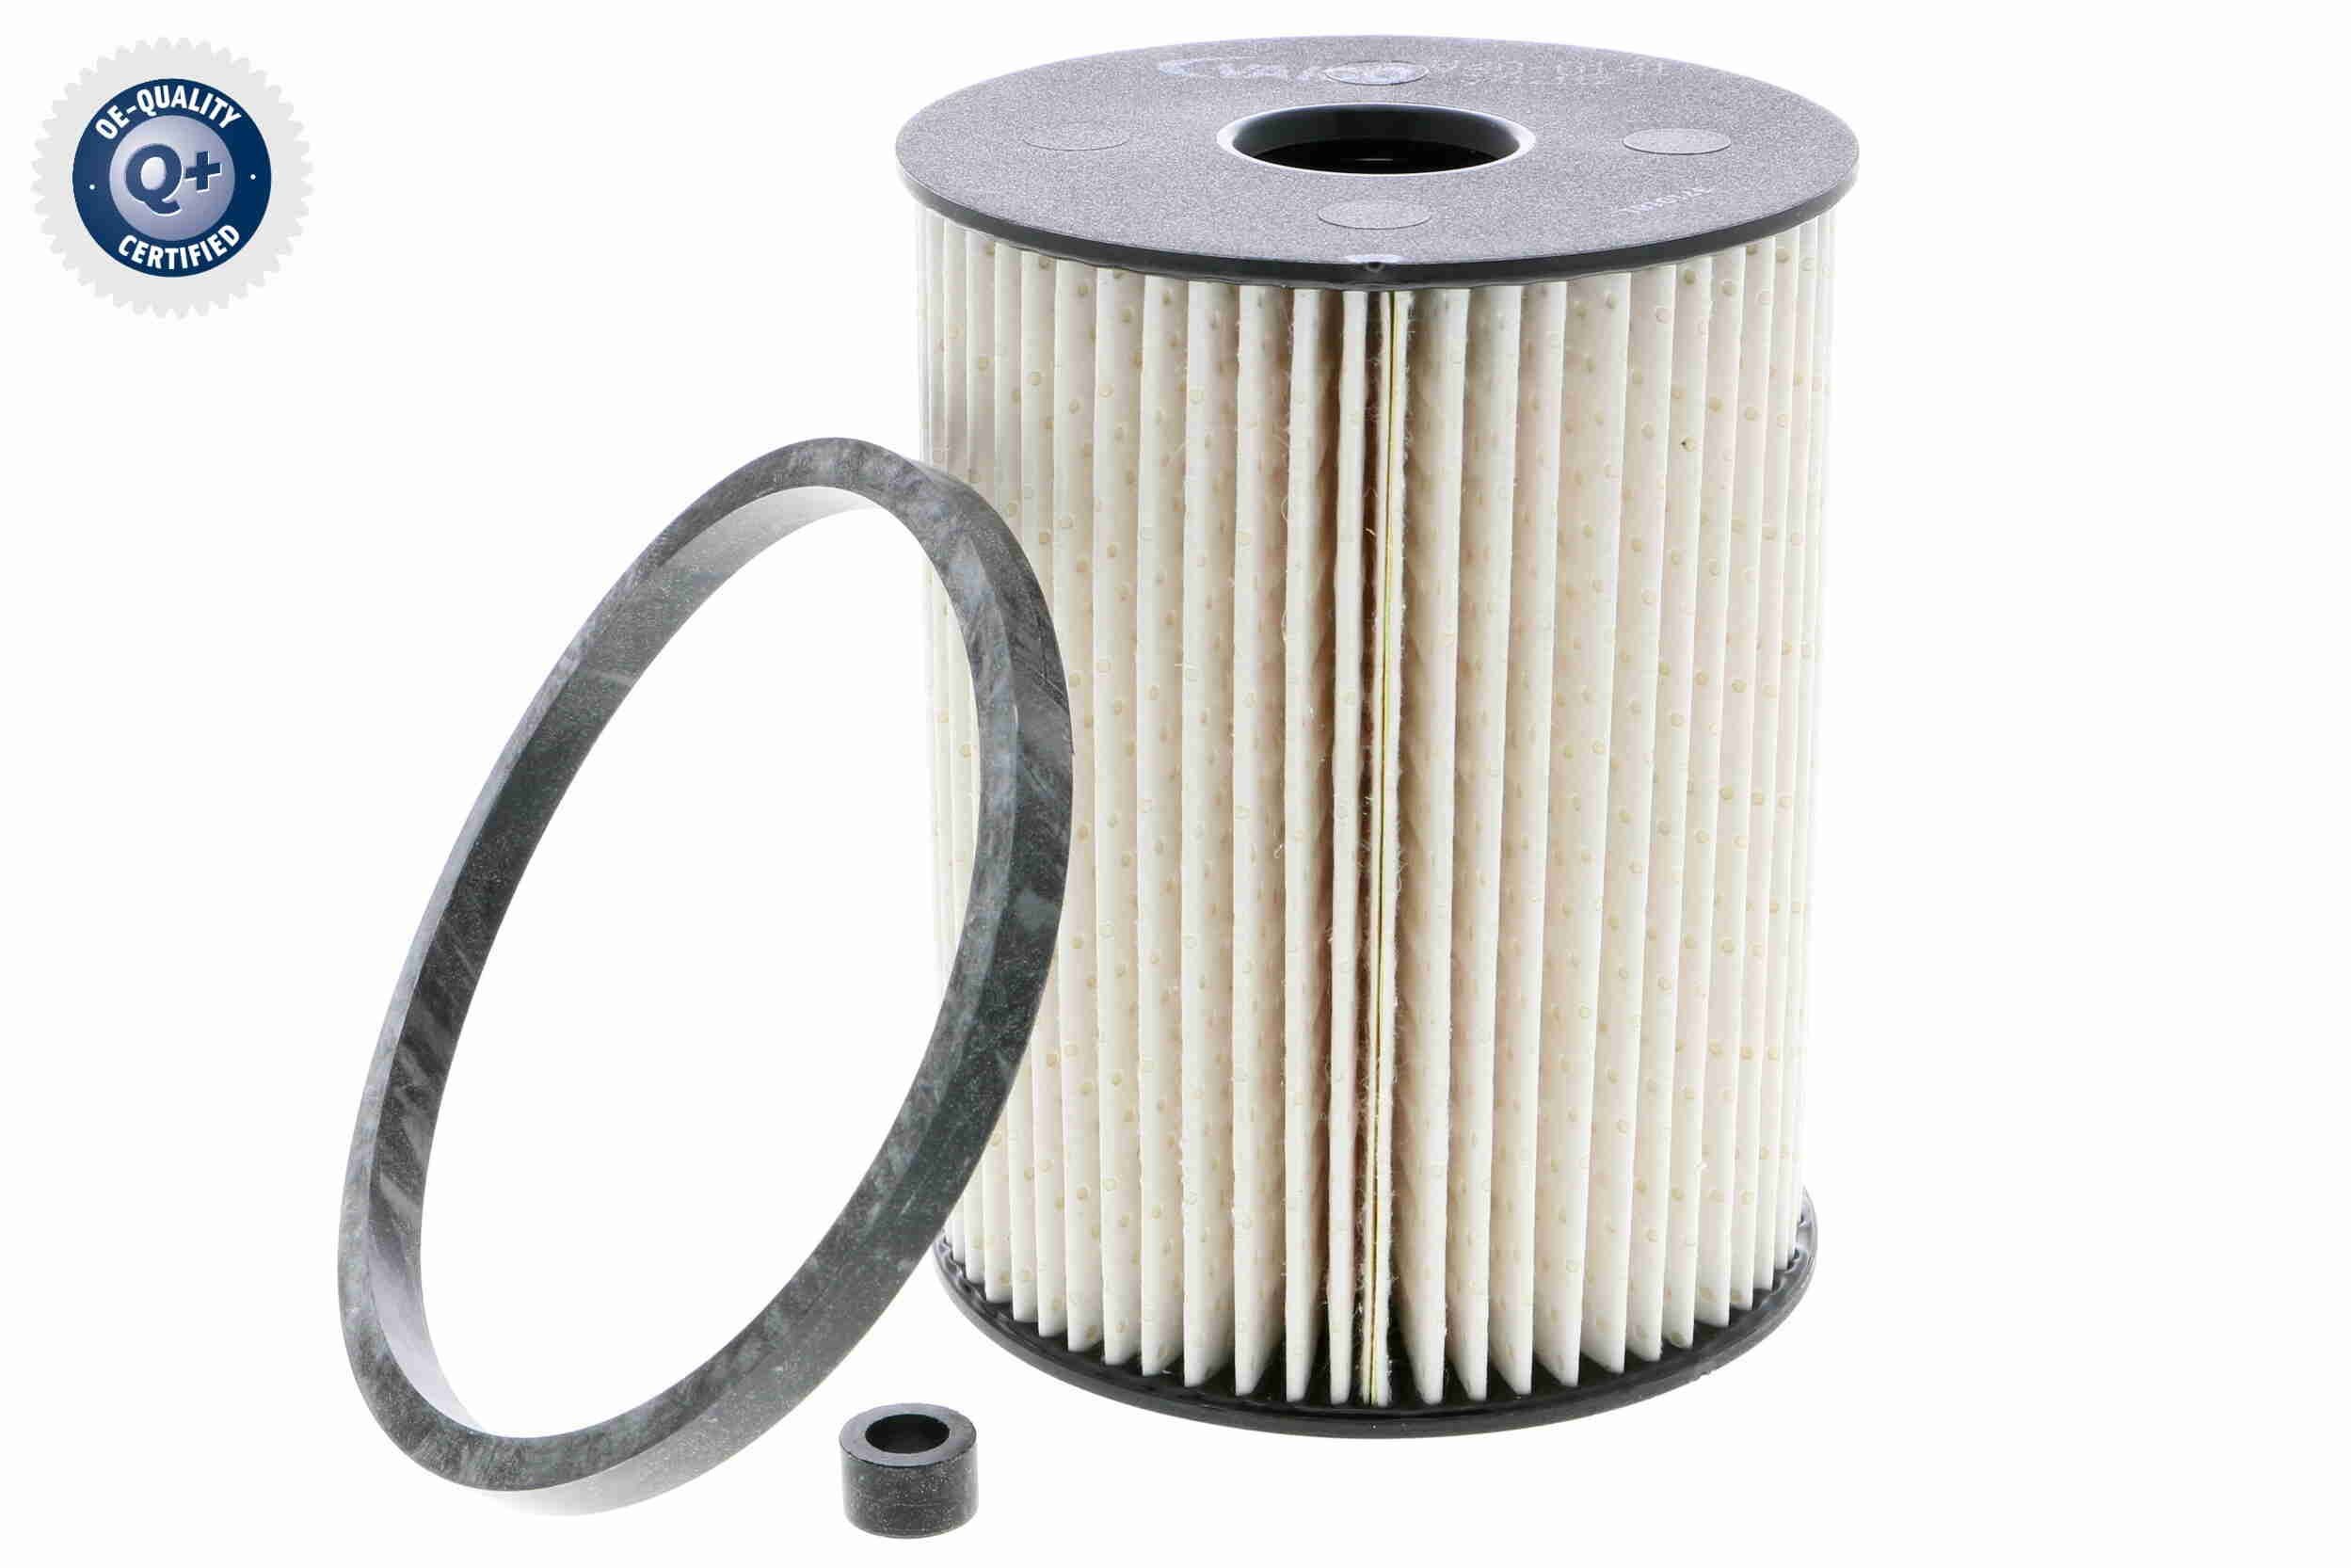 VAICO V40-0141 Fuel filter Filter Insert, Q+, original equipment manufacturer quality